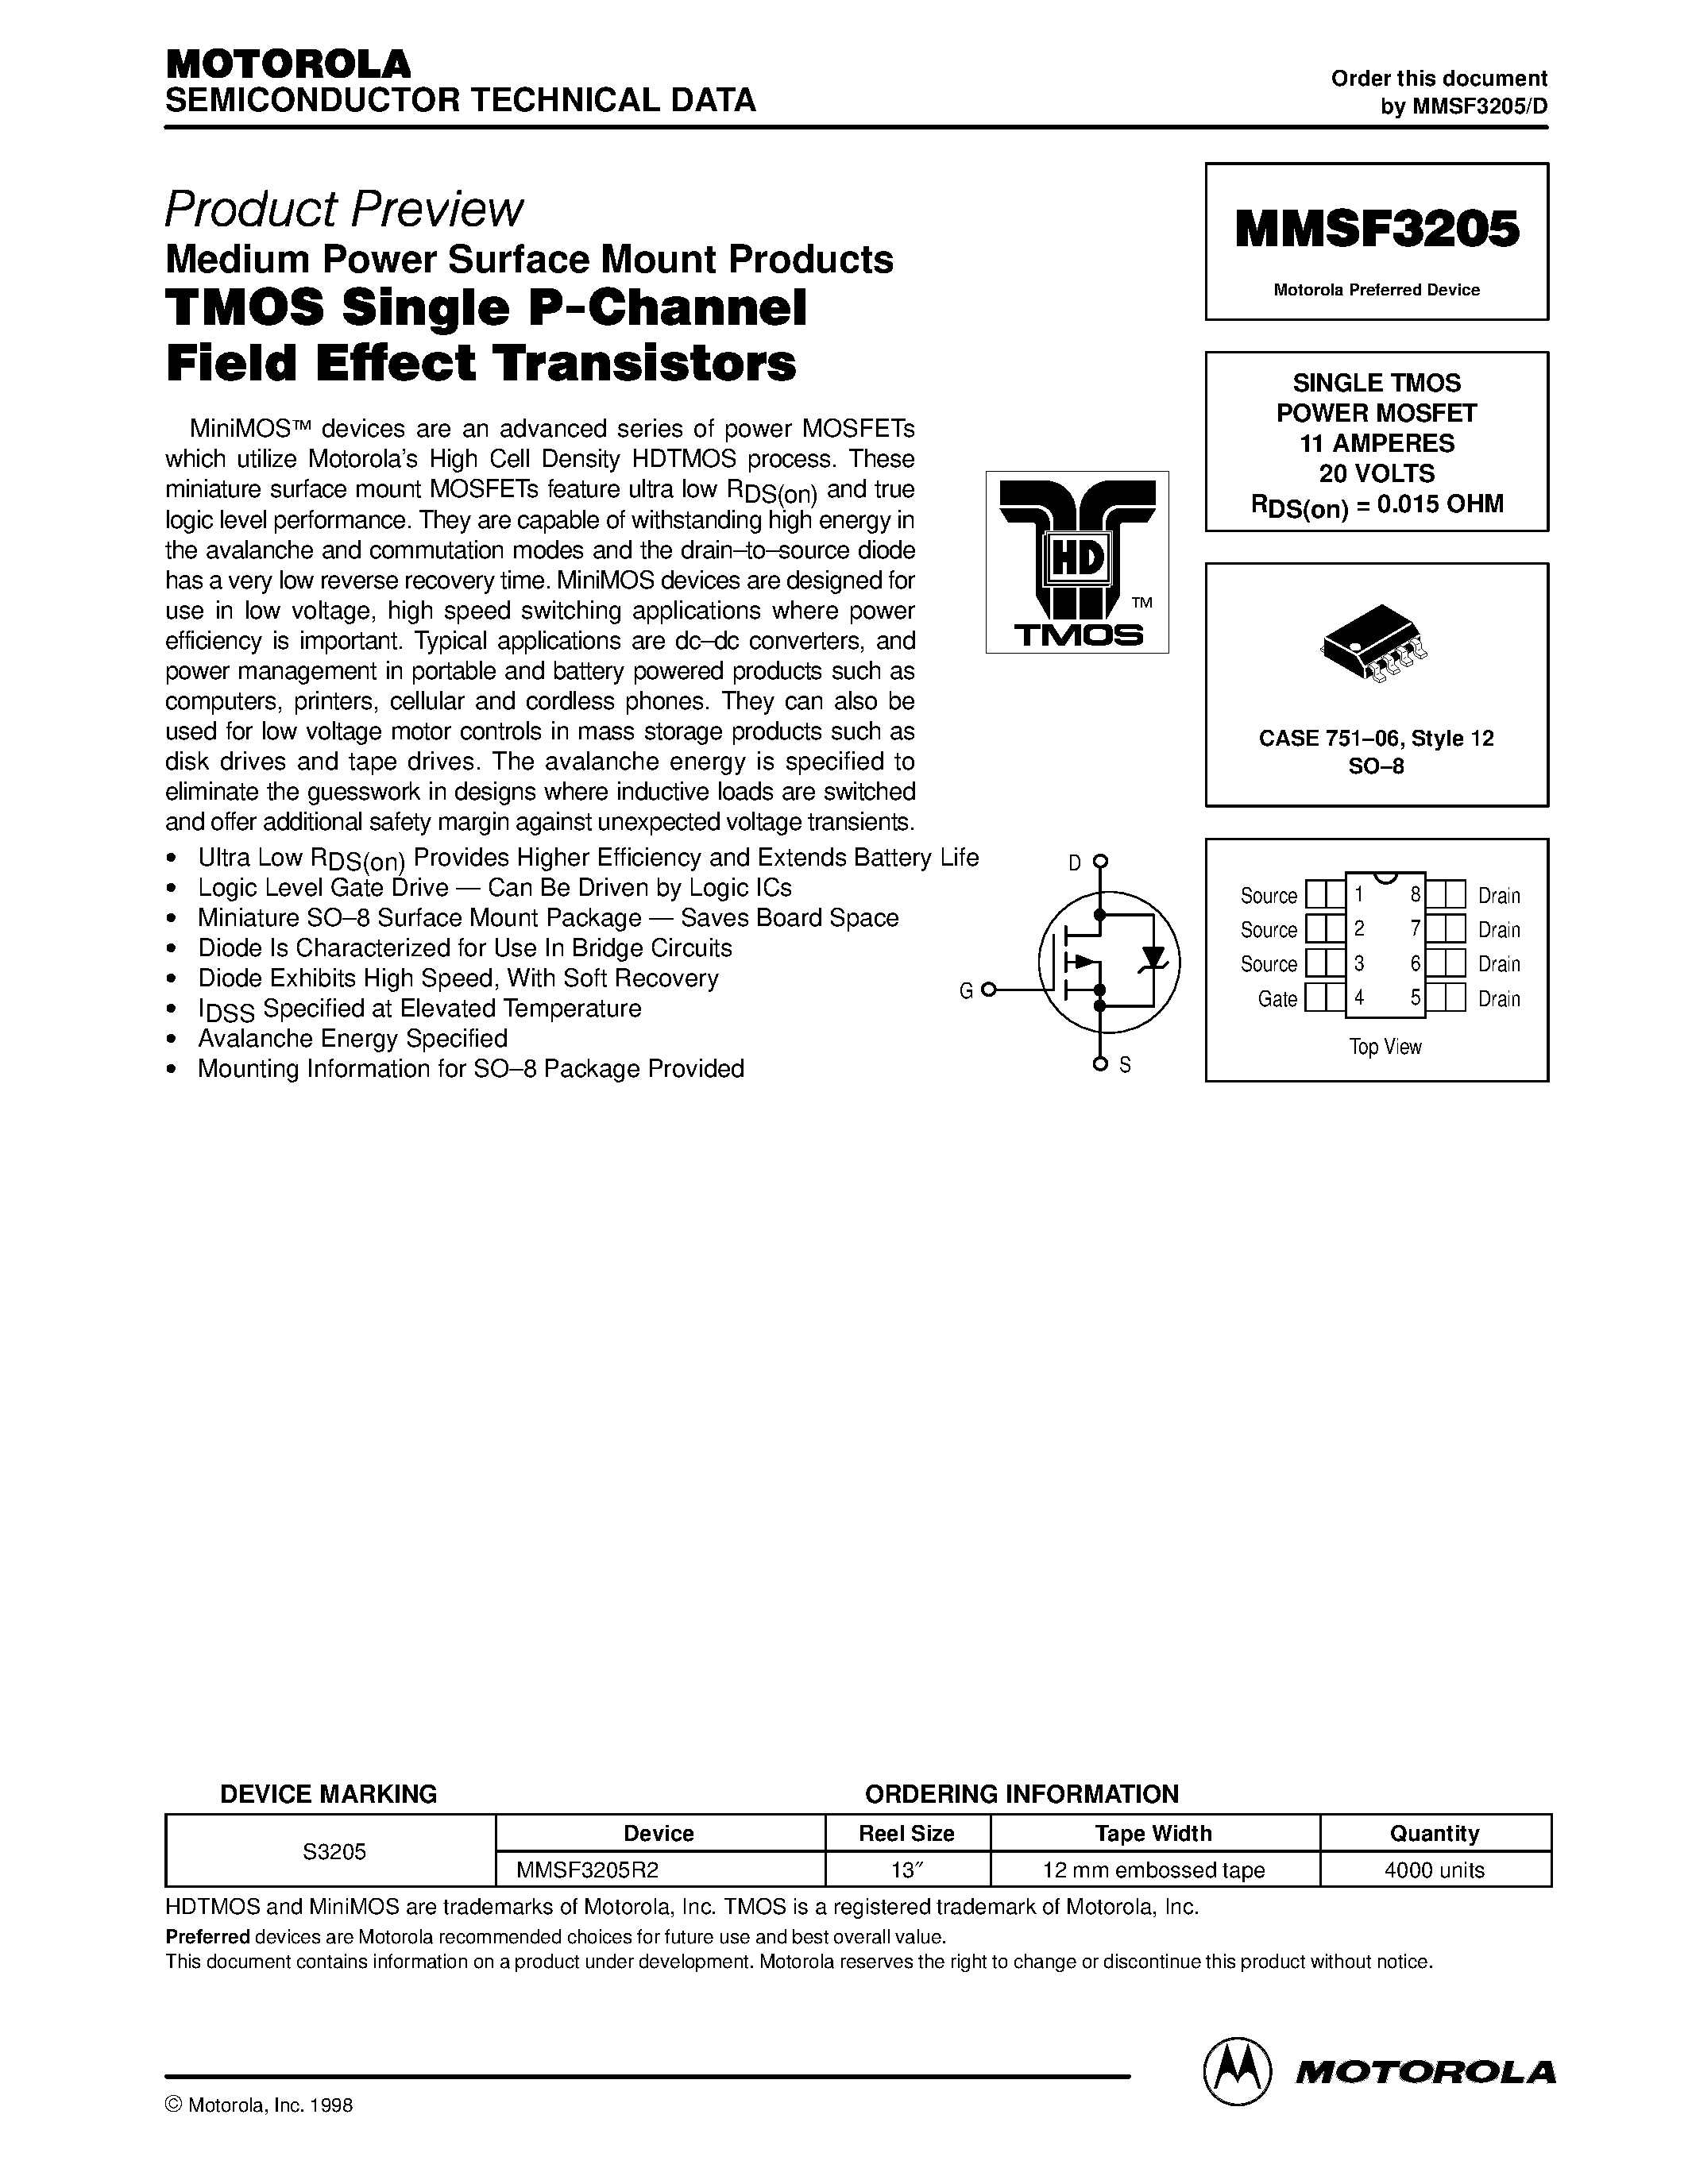 Datasheet MMSF3205 - SINGLE TMOS POWER MOSFET 11 AMPERES 20 VOLTS page 1